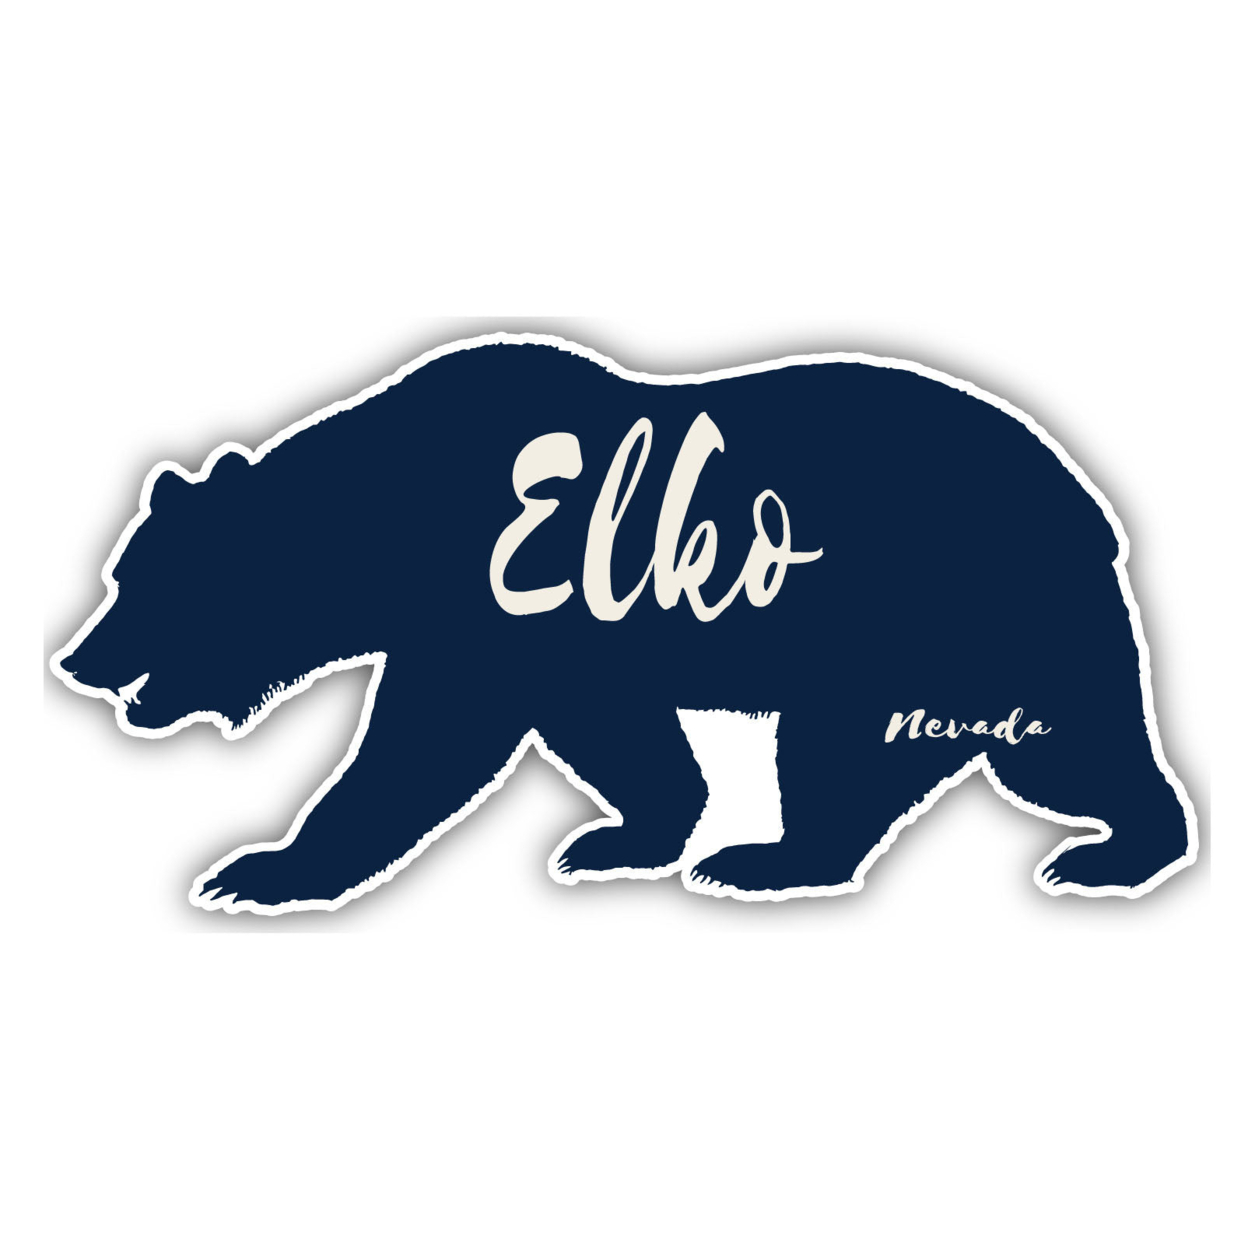 Elko Nevada Souvenir Decorative Stickers (Choose Theme And Size) - Single Unit, 8-Inch, Camp Life